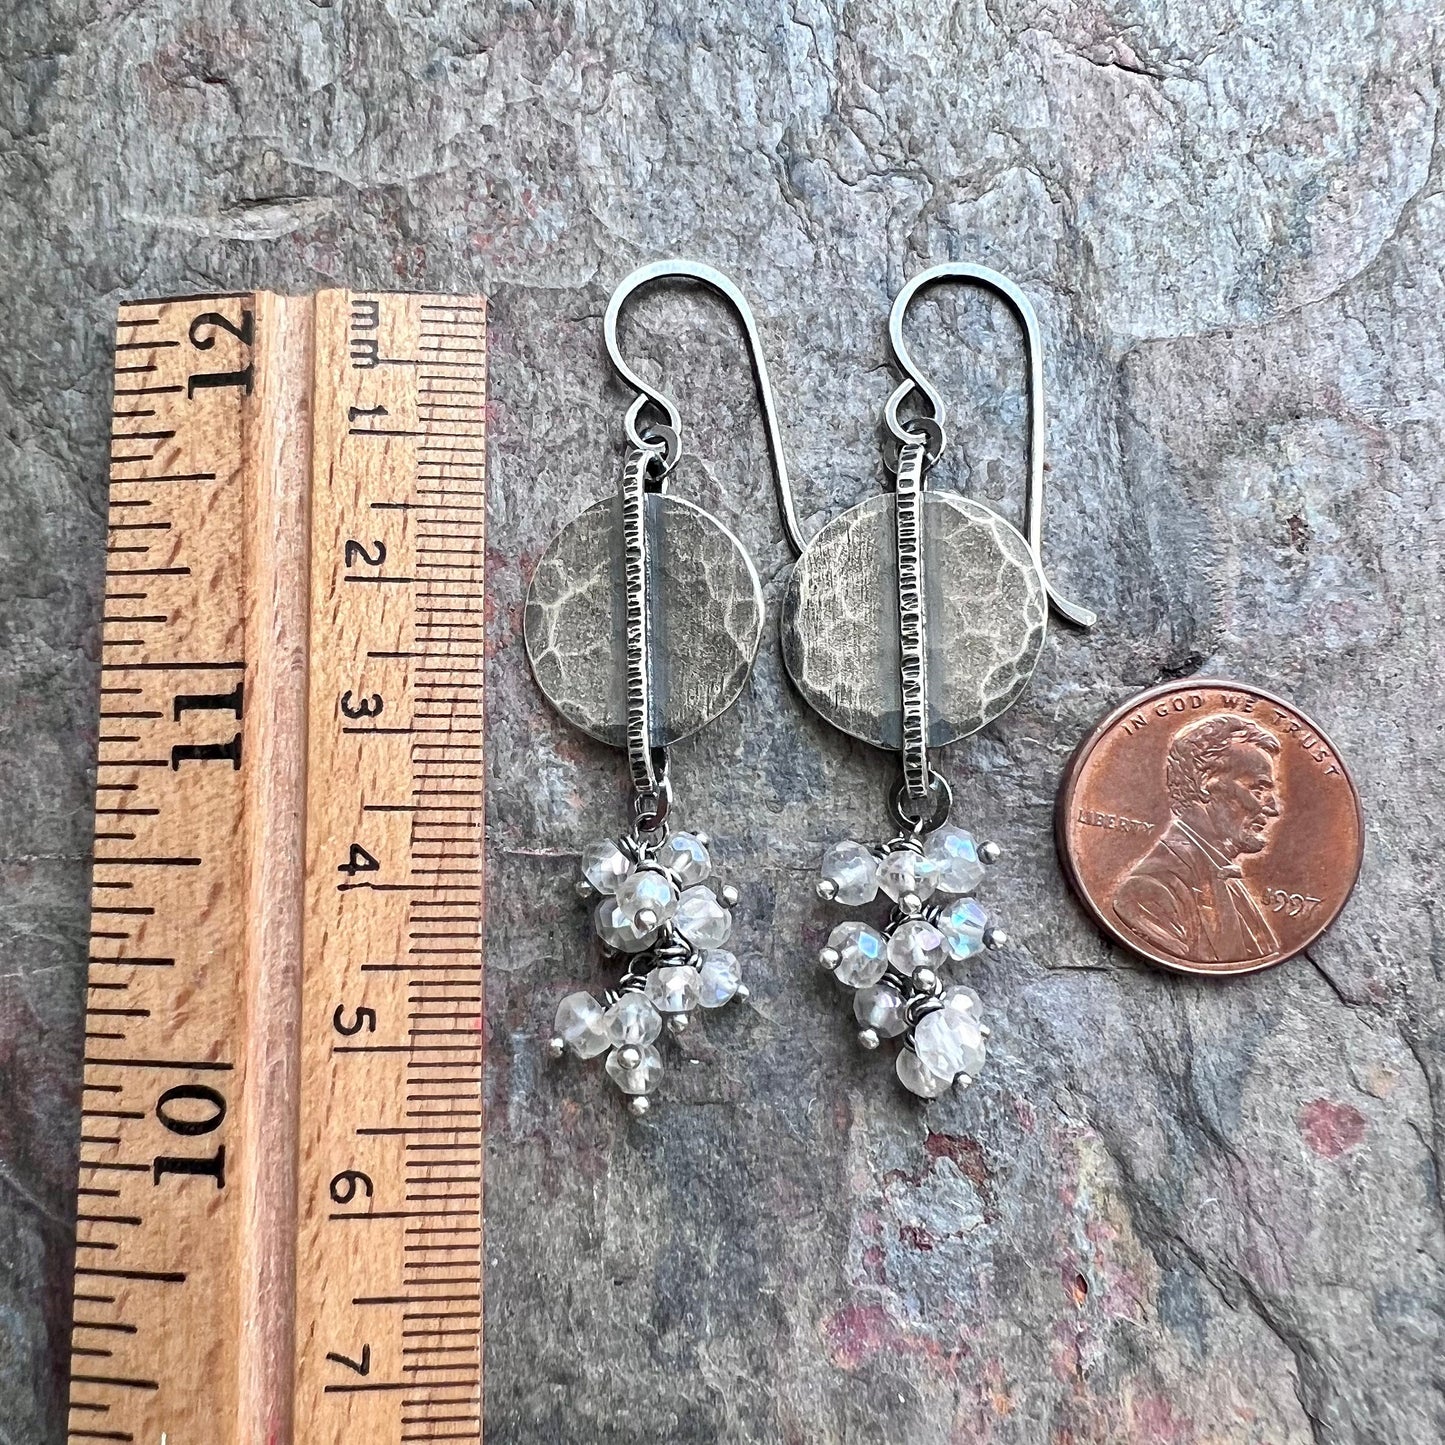 Sterling Silver Crystal Quartz Earrings - Frosted Rock Crystal Quartz and Sterling Silver Earrings